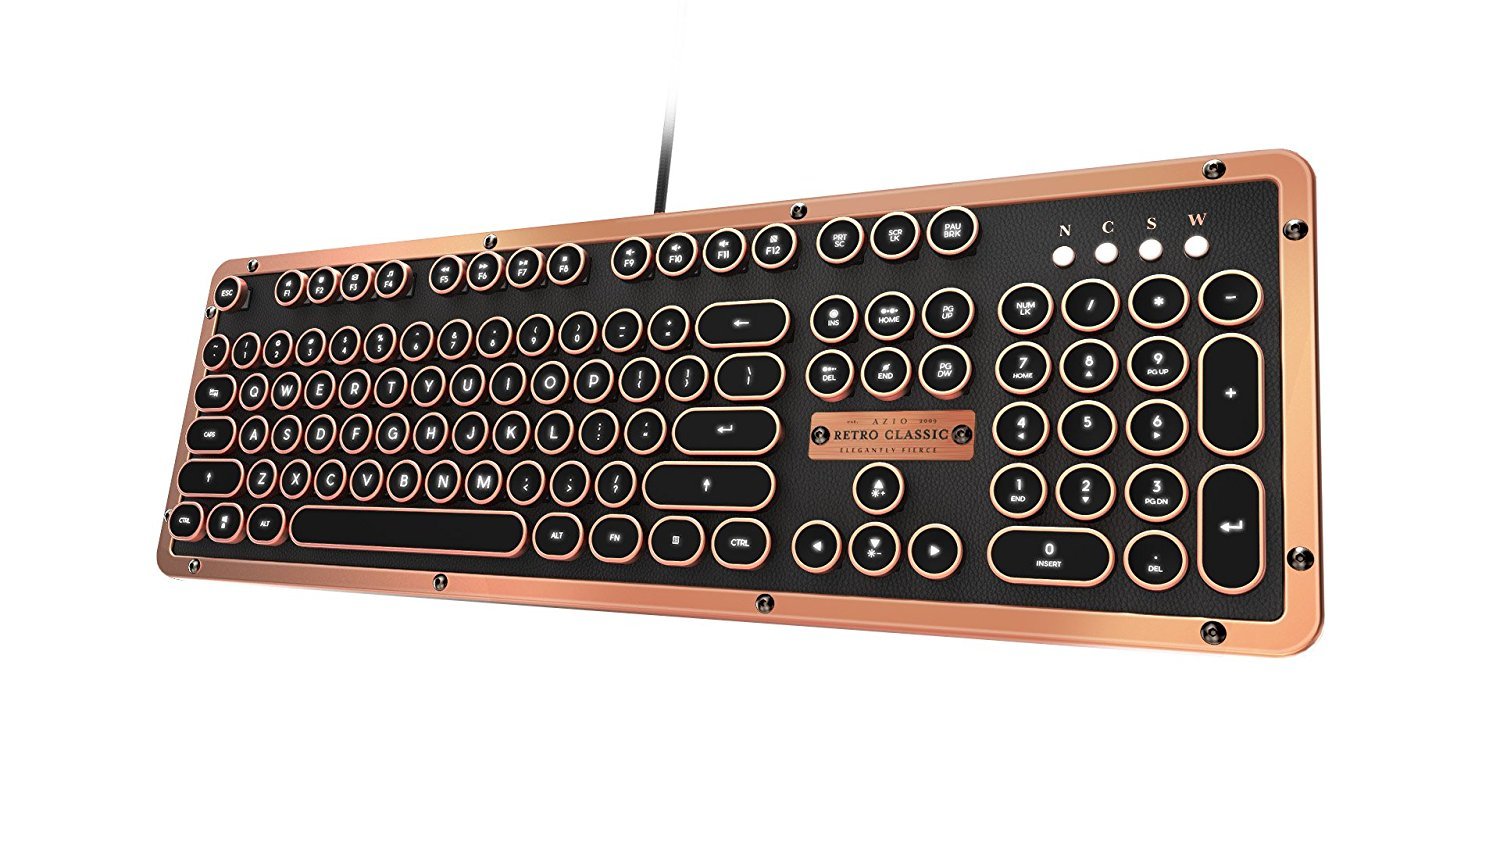 azio-retro-classic-keyboard.jpg